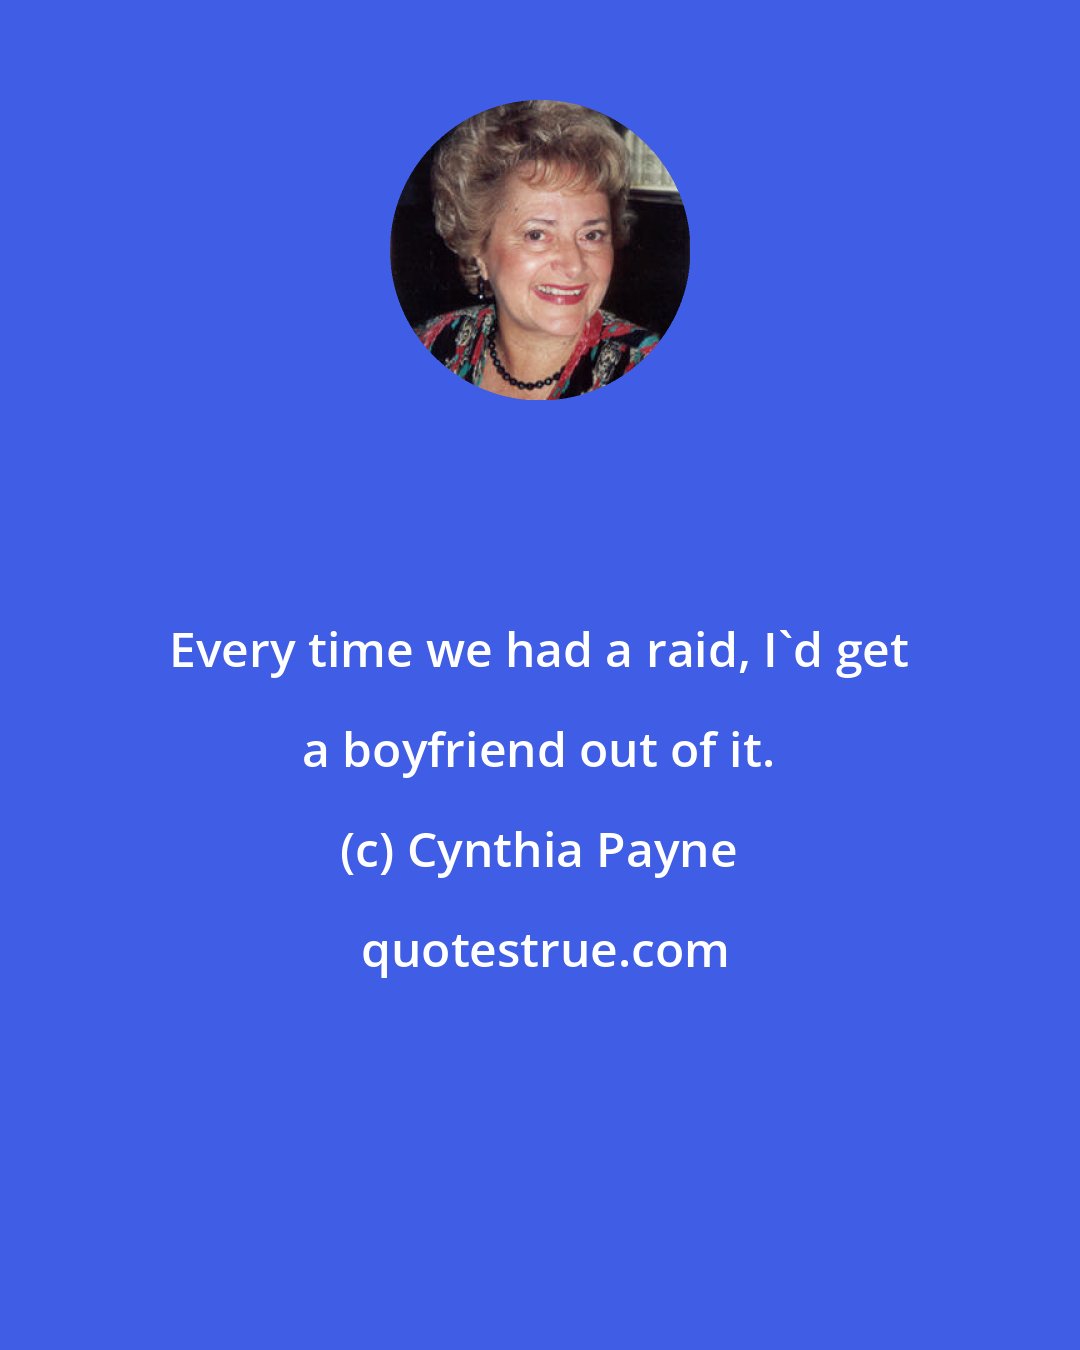 Cynthia Payne: Every time we had a raid, I'd get a boyfriend out of it.